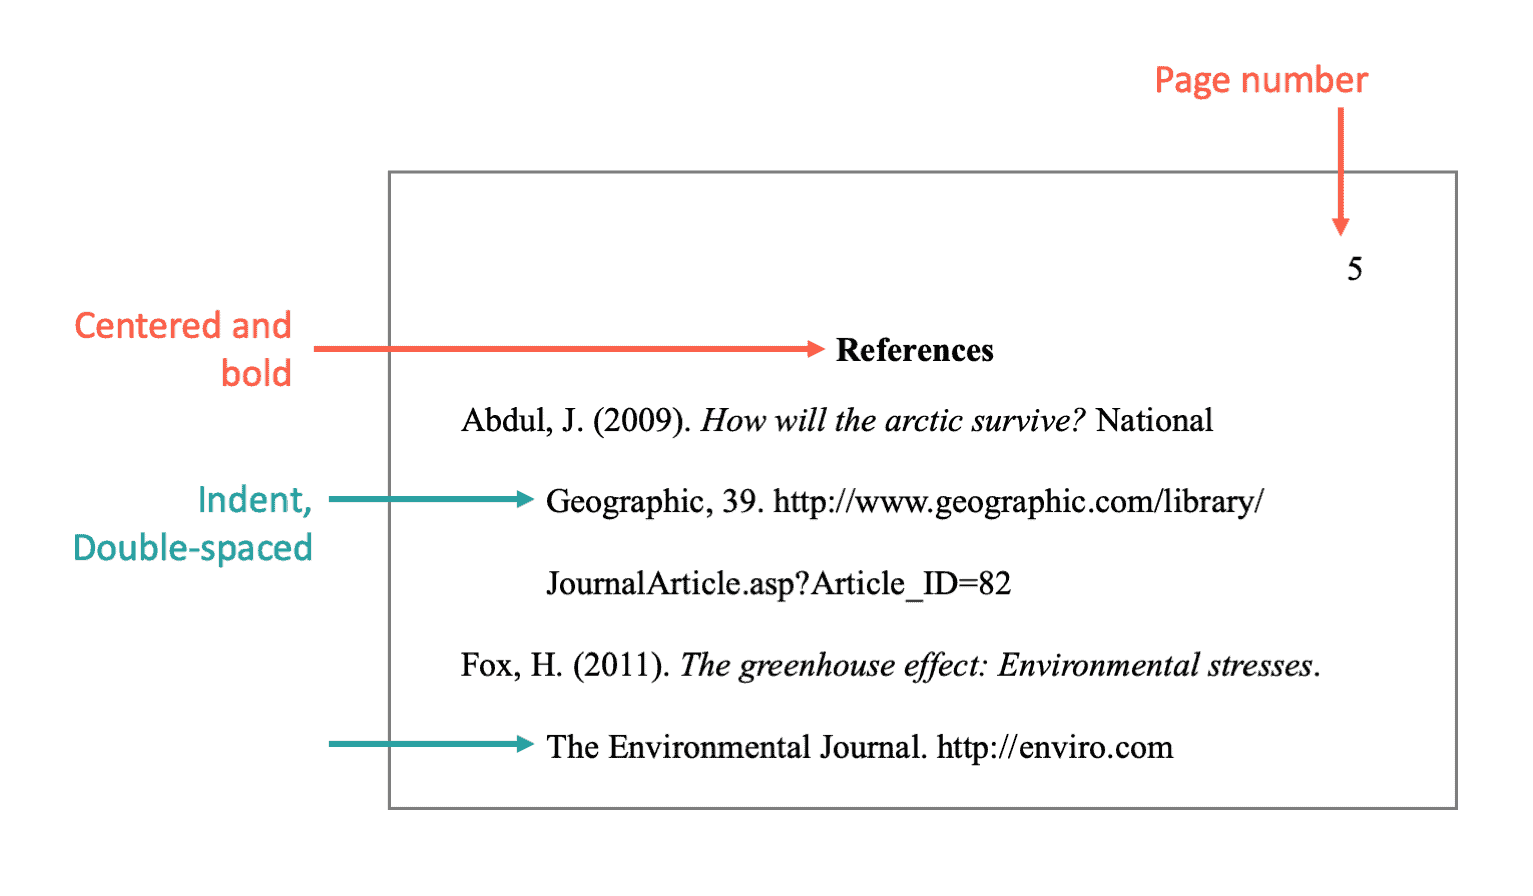 sample asa annotated bibliography